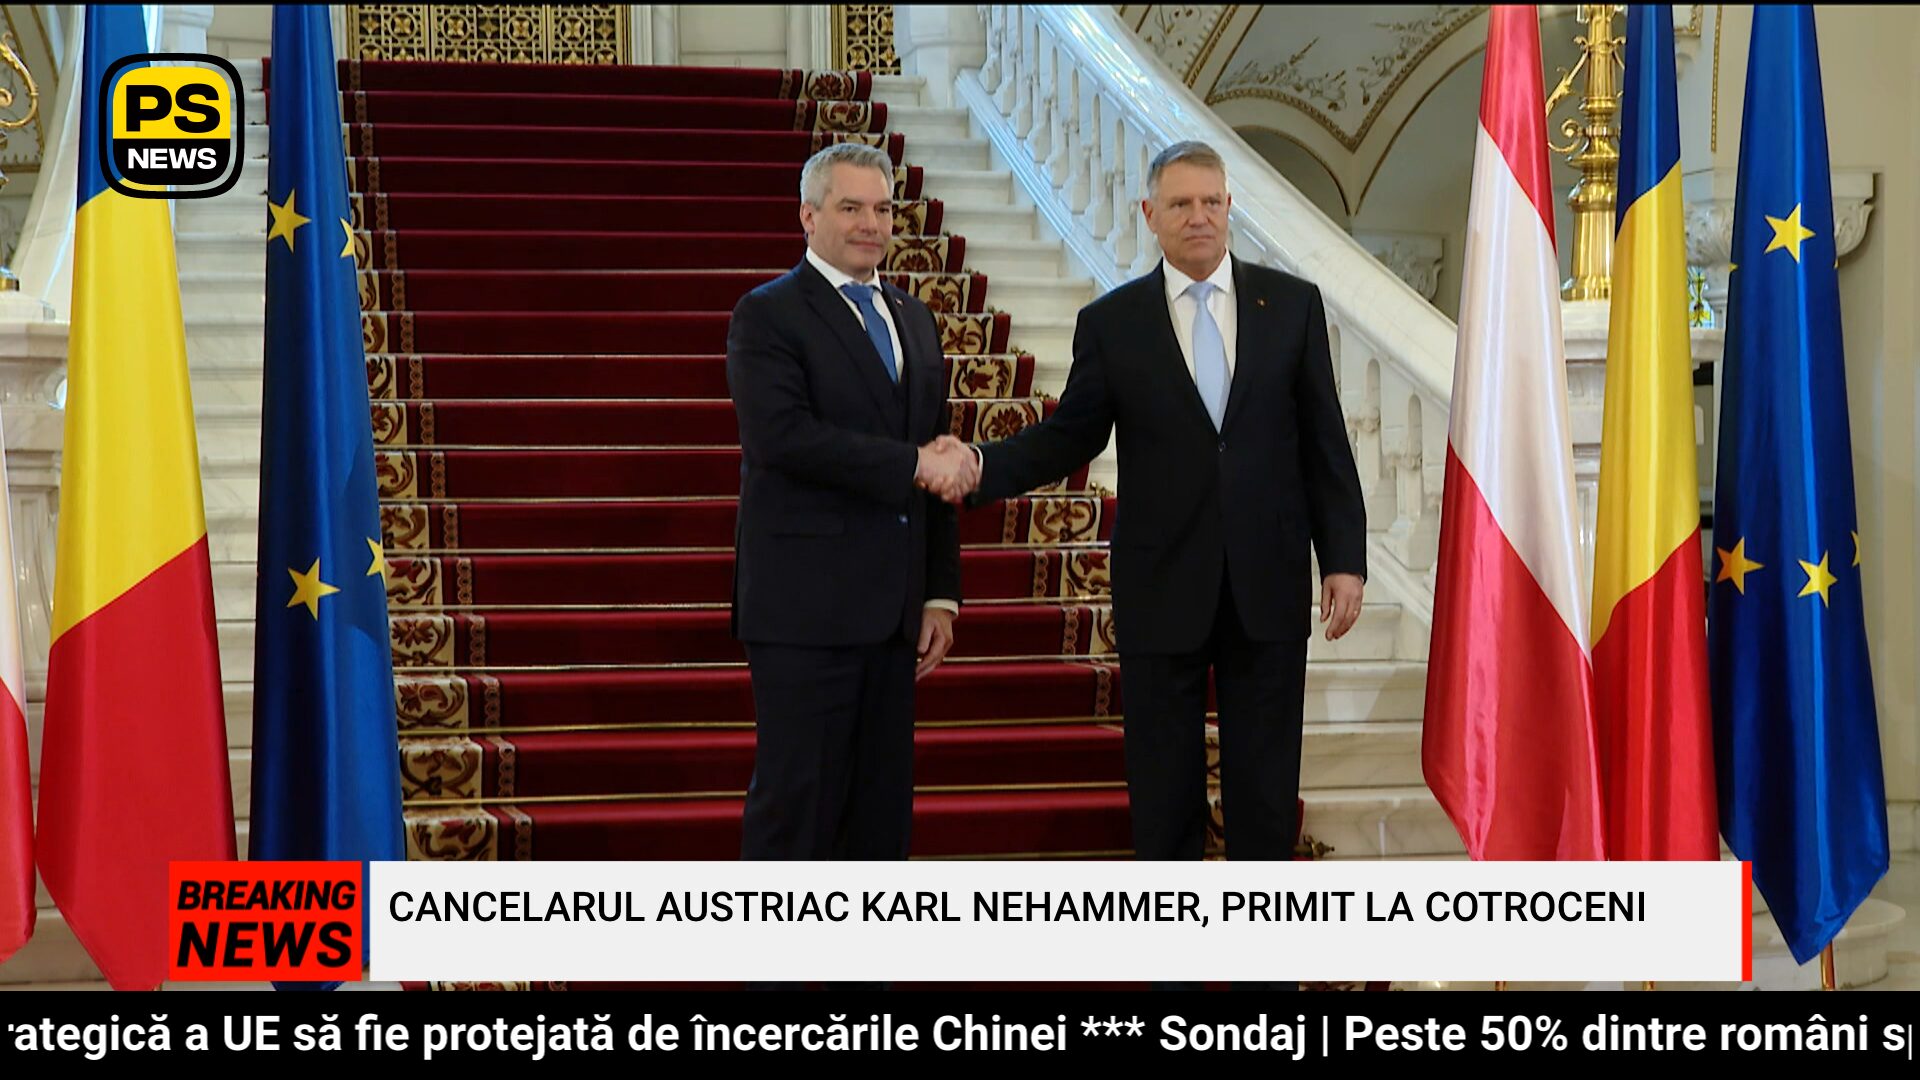 PS News TV | Cancelarul austriac Karl Nehammer, primit la Cotroceni de președintele Iohannis